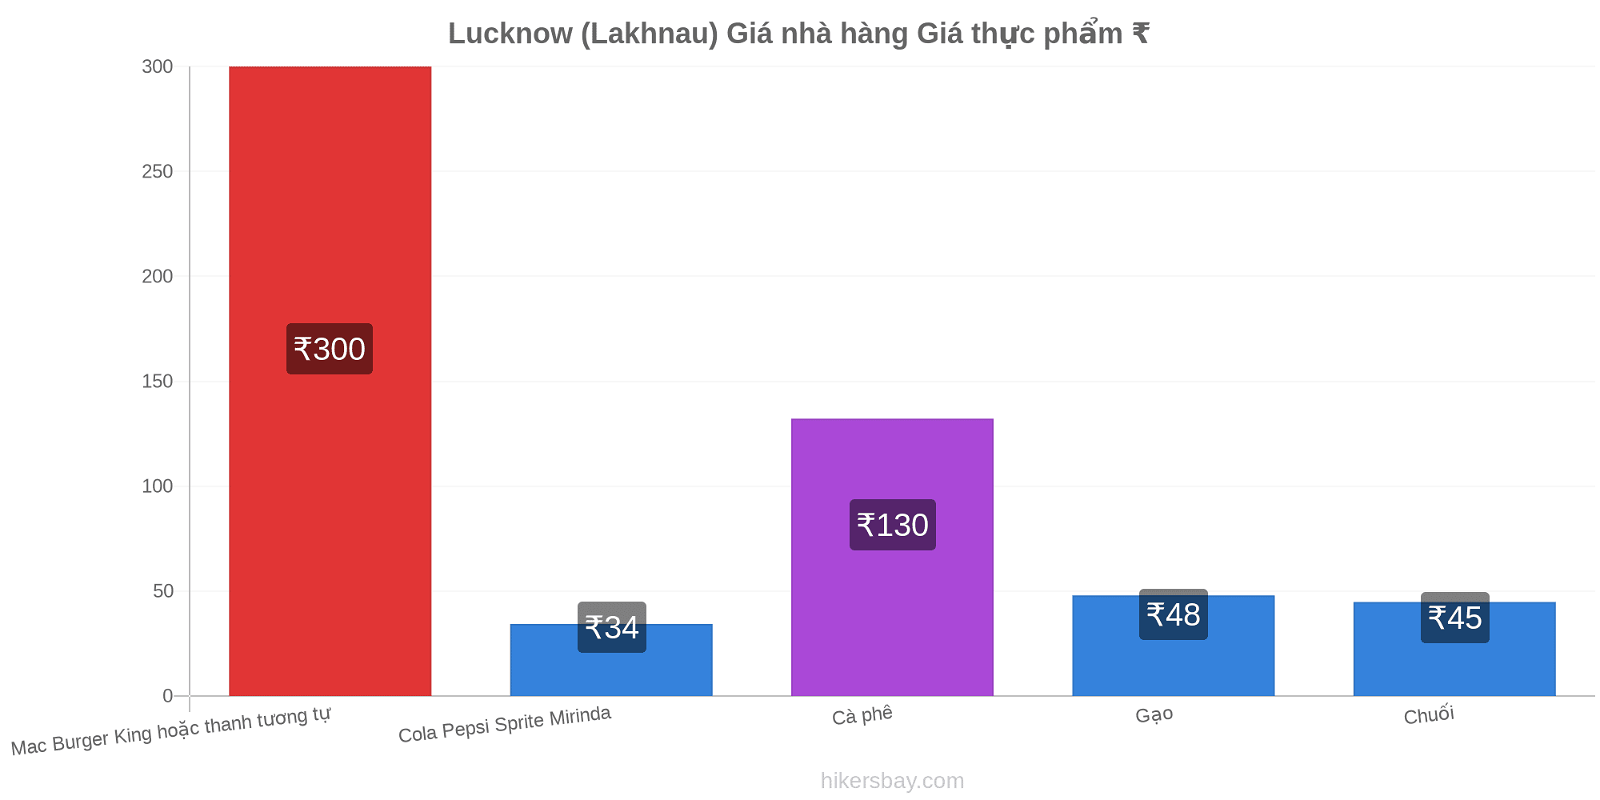 Lucknow (Lakhnau) thay đổi giá cả hikersbay.com